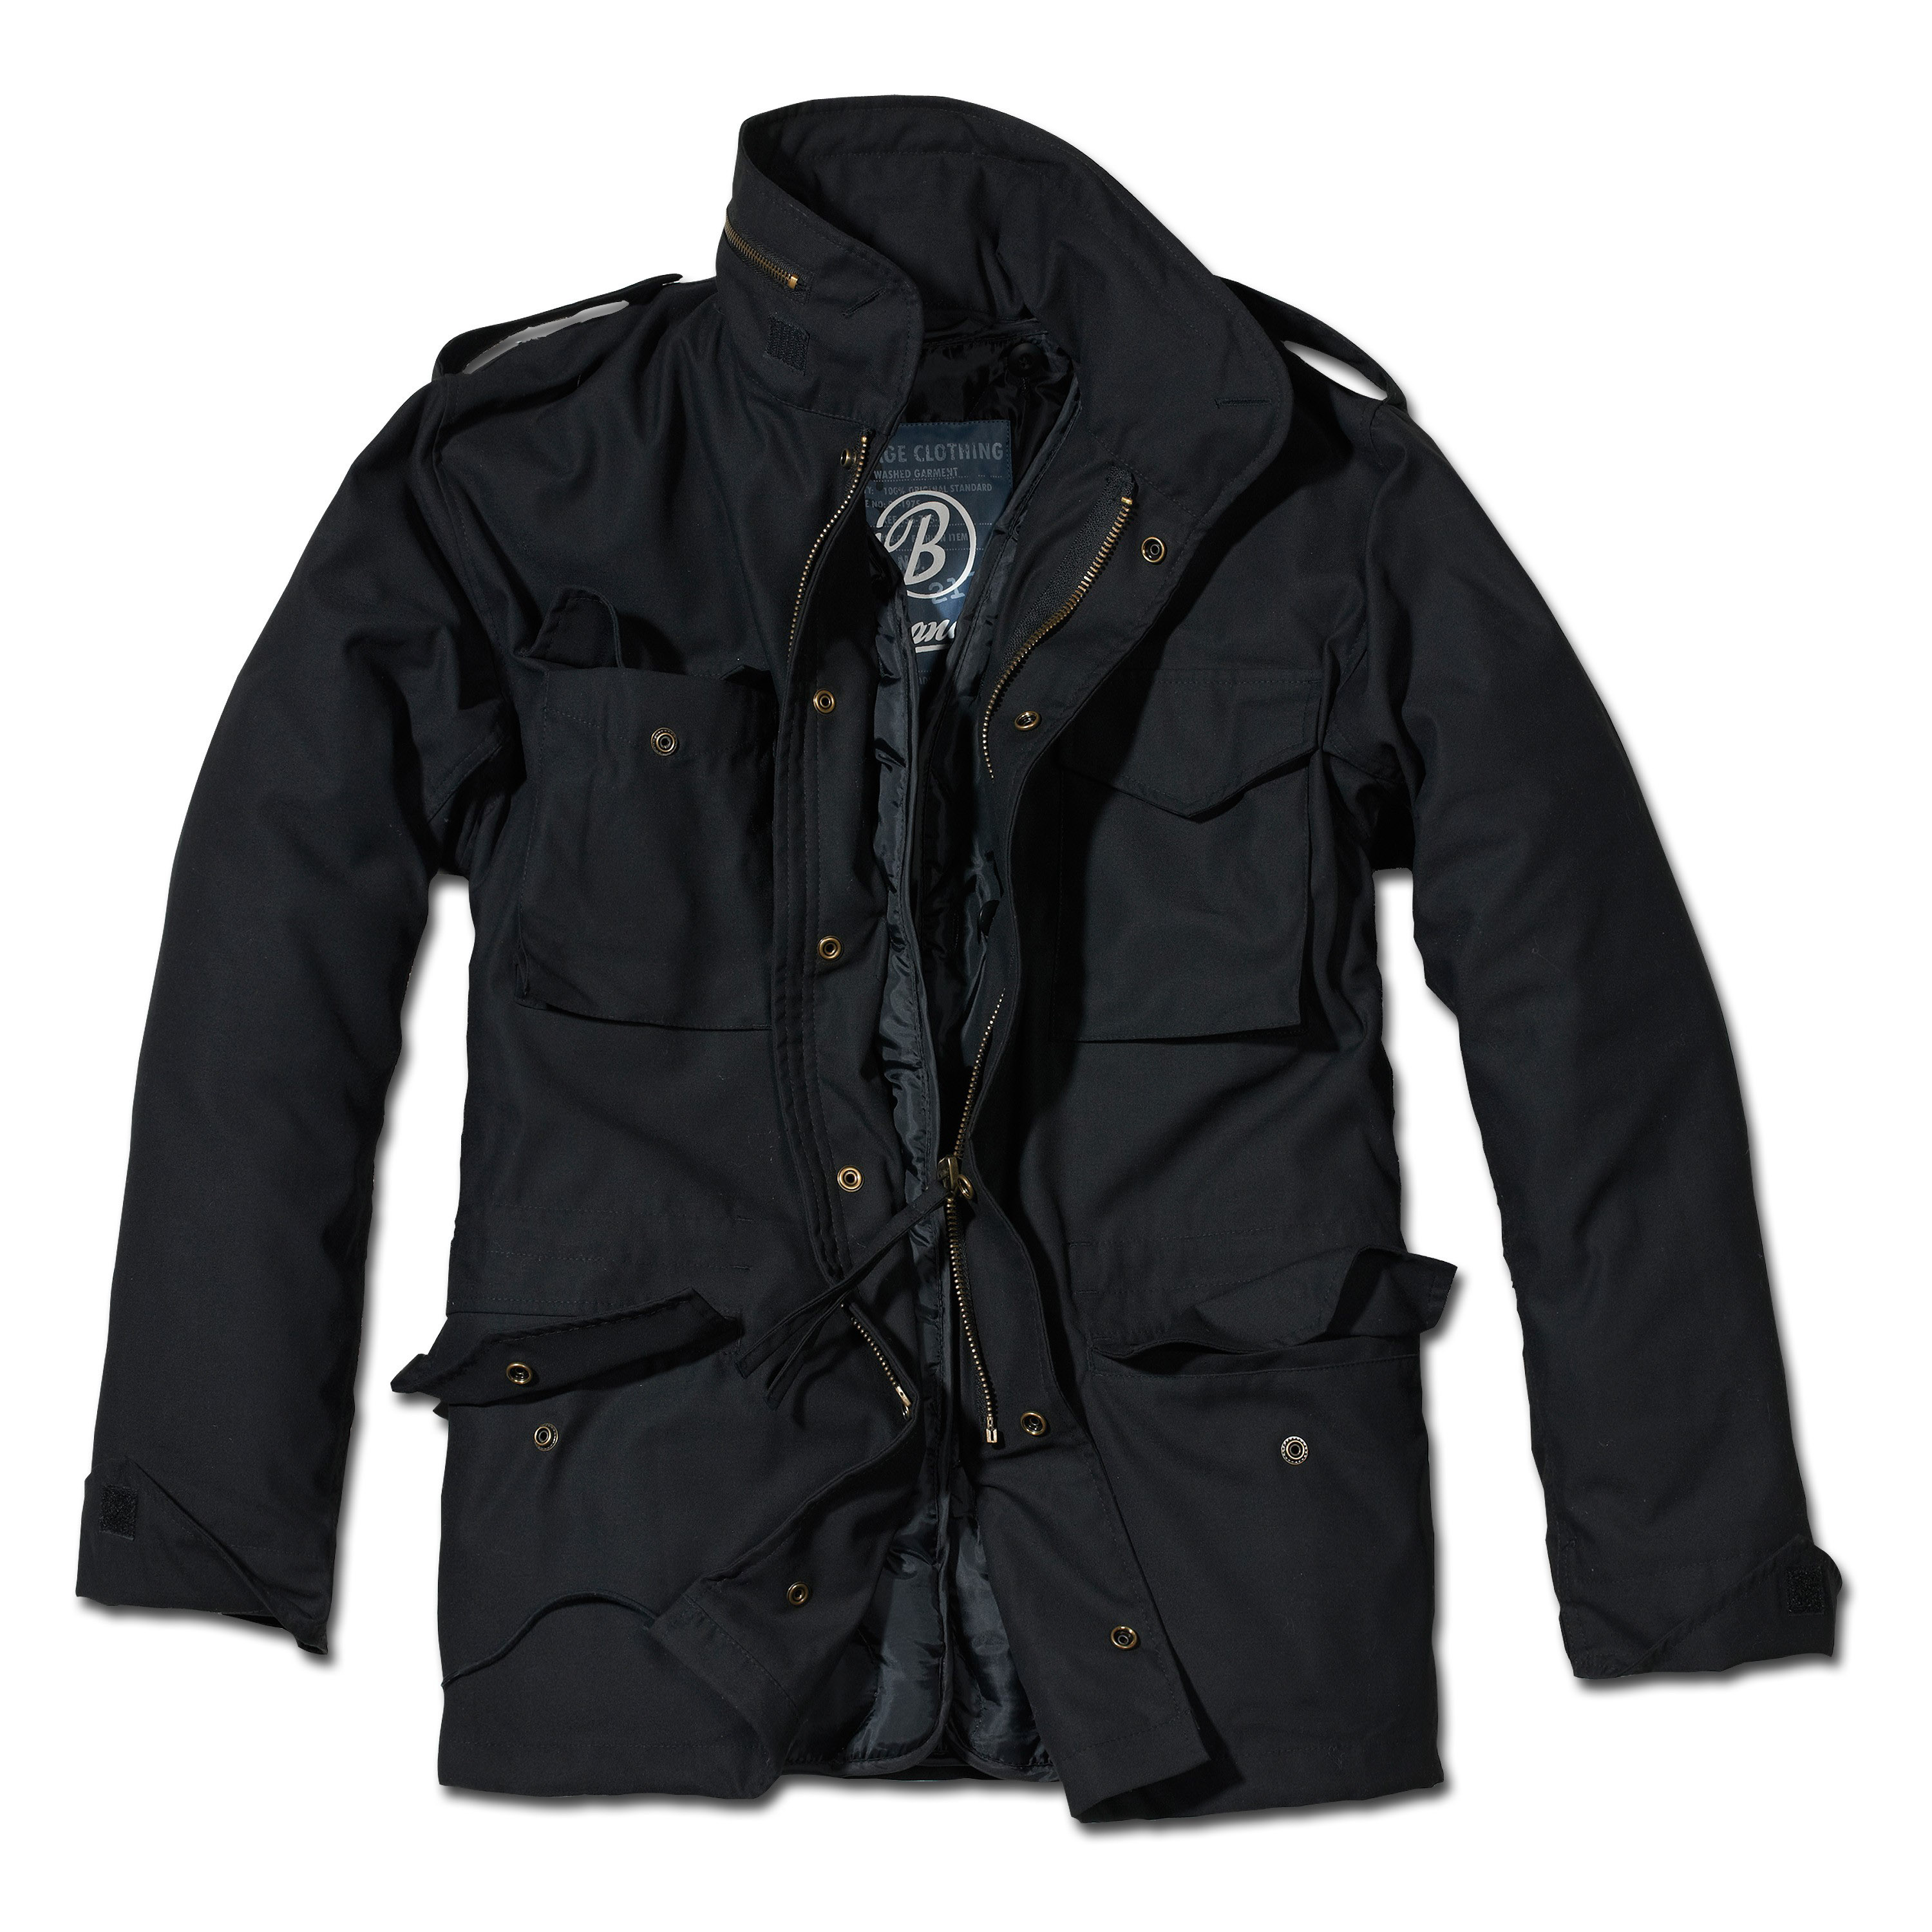 Куртка мужская 65. Brandit m65. M65 Standard Brandit. Куртка m65 Standard Brandit Black. M-65 Classic Brandit.